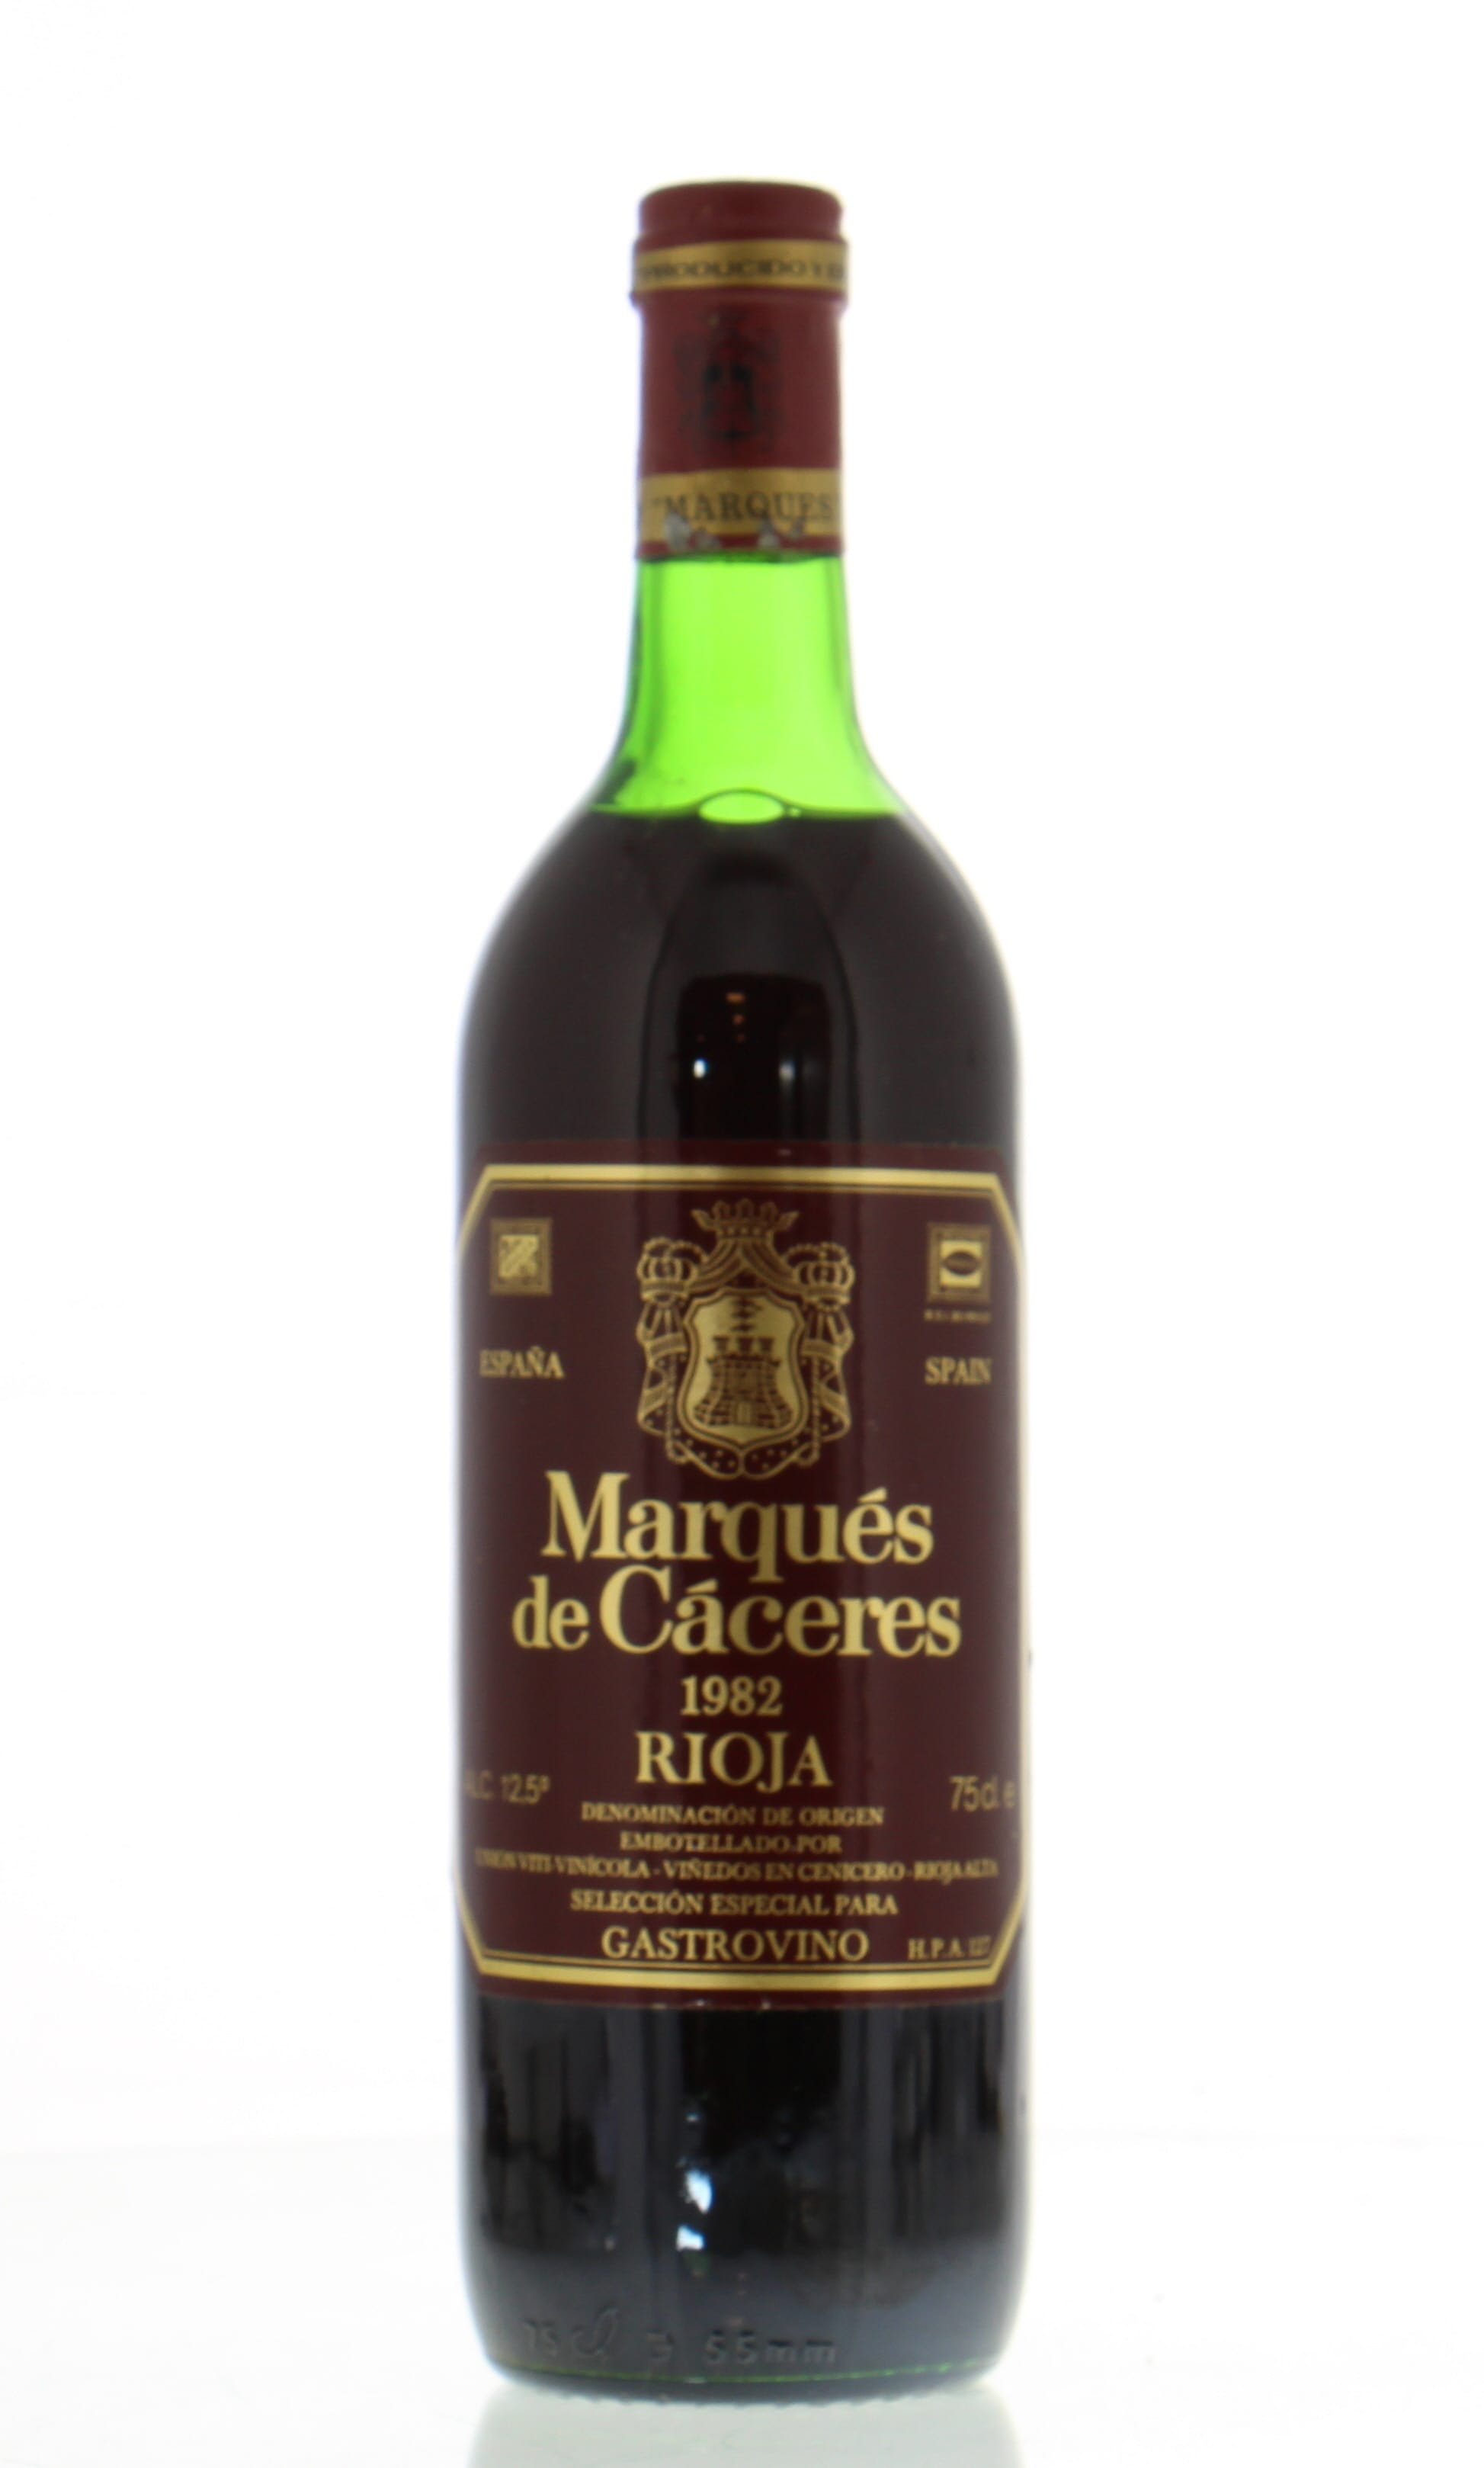 Marques de Caceres - Rioja 1982